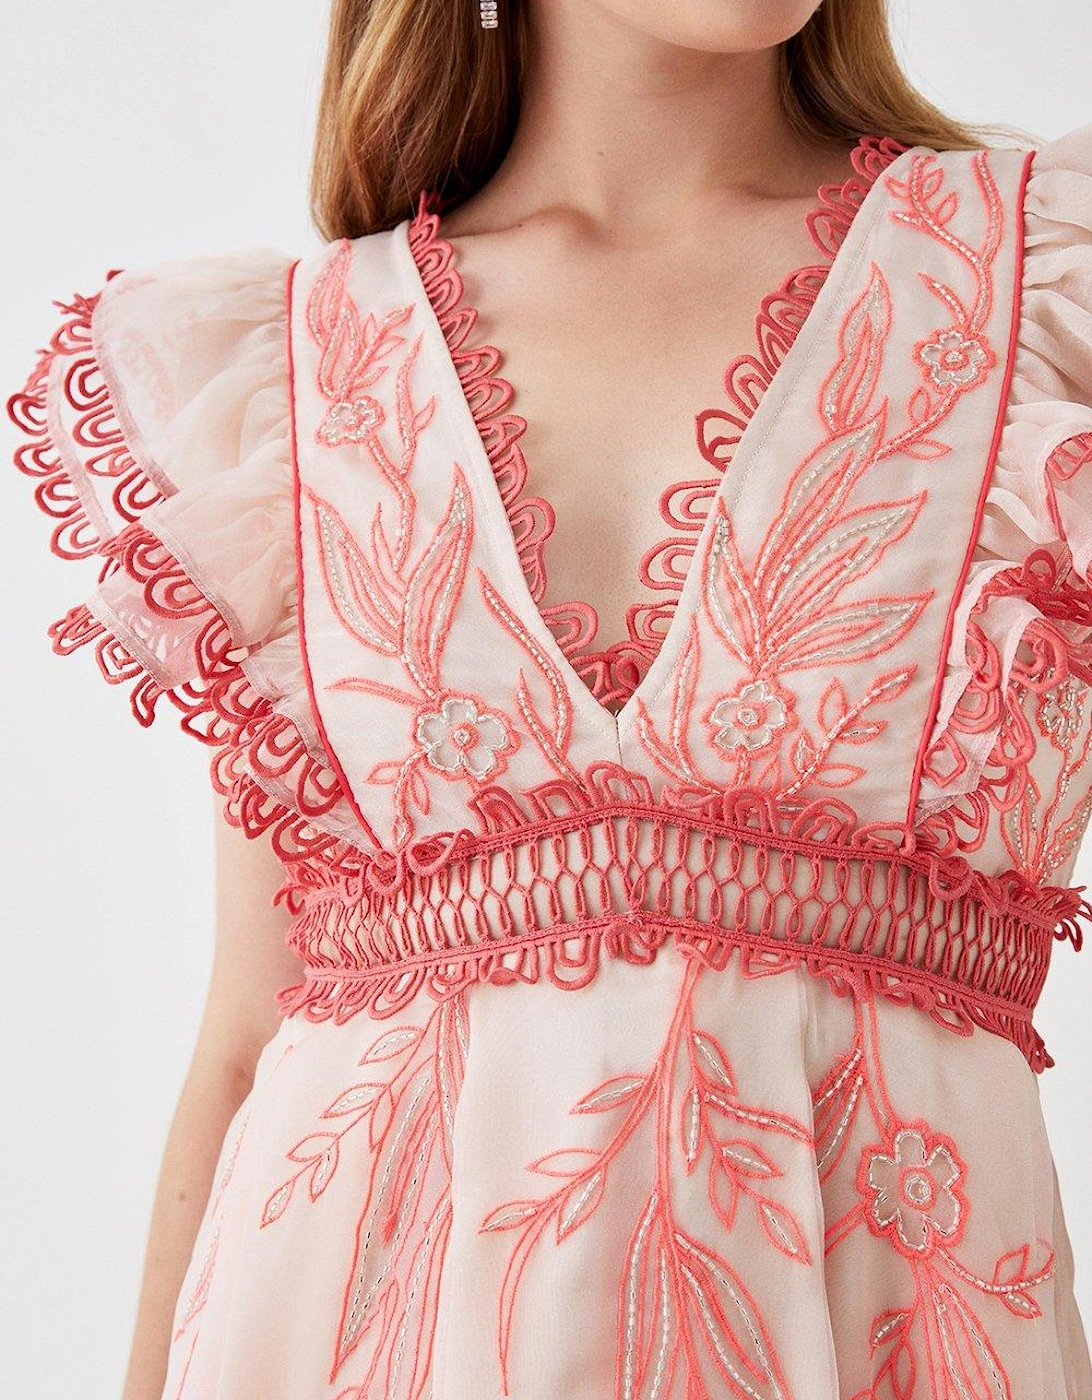 Premium Embroidered Organza Mini Dress With Ruffle Shoulder